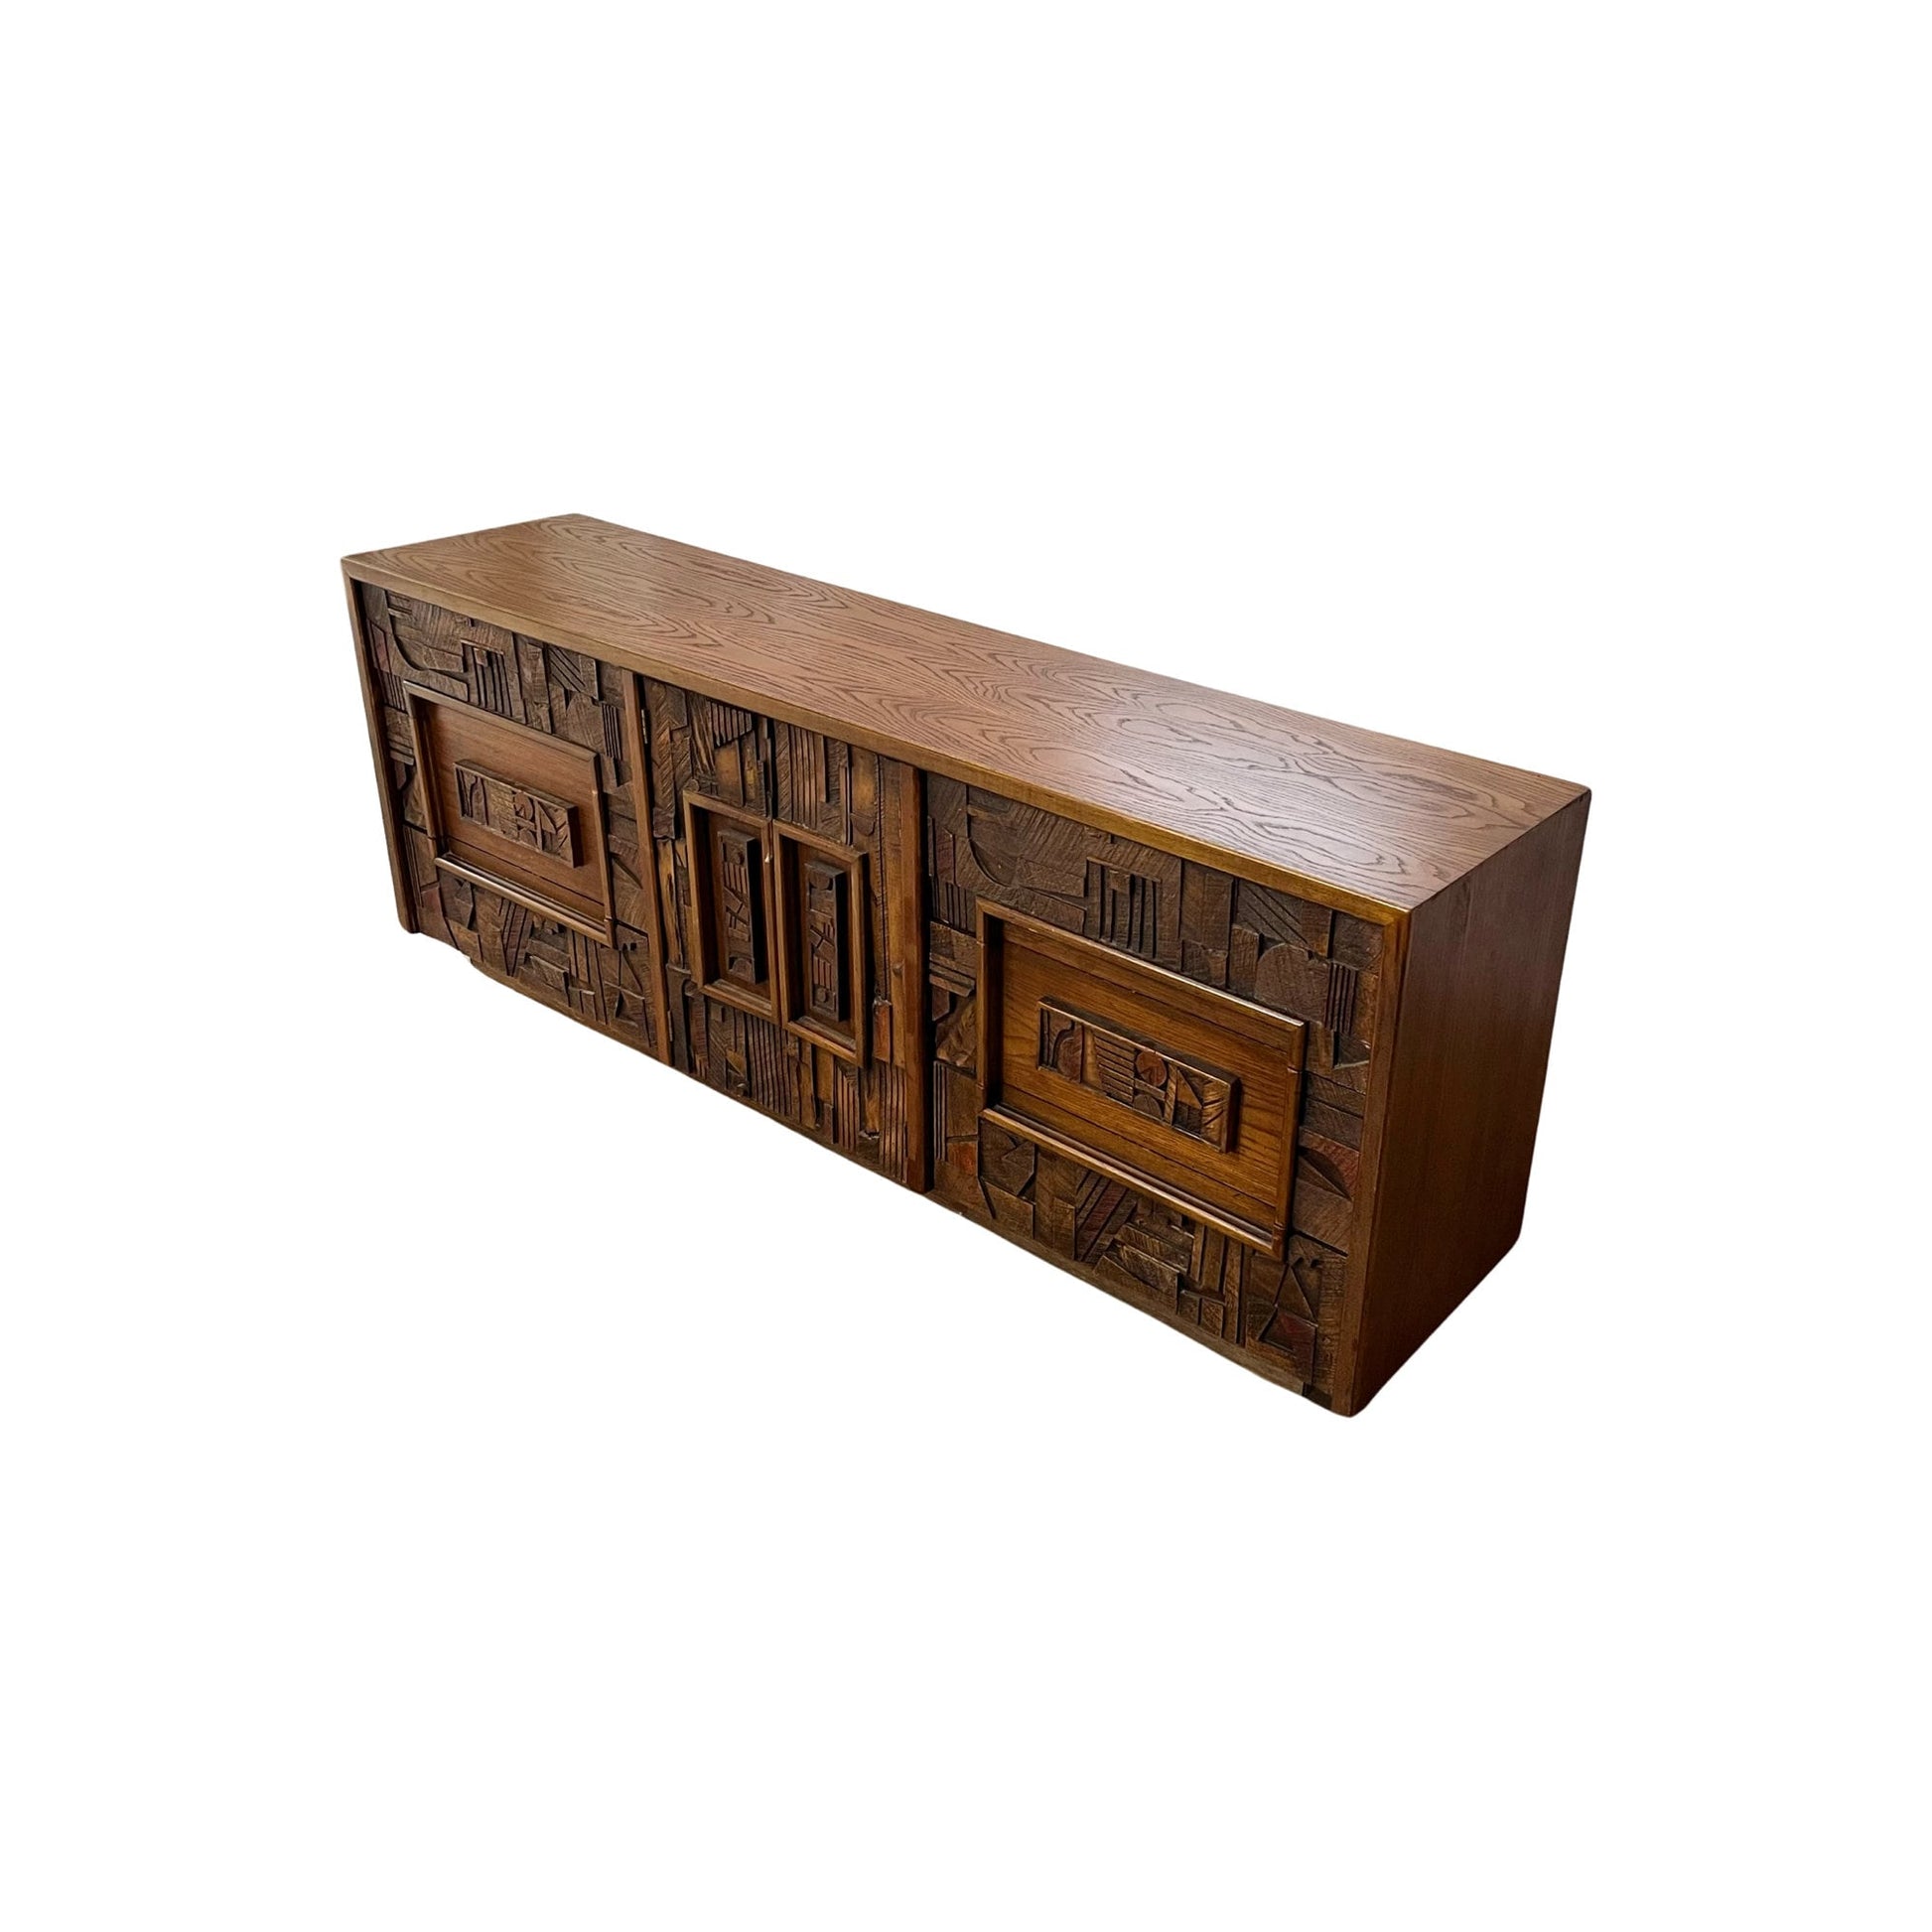 Southwestern-Style Brutalist Pattern on All Nine Drawers and Beautiful Wood Grain on Top - Brustlist 9 Drawer Lowboy Dresser by Lane Furniture